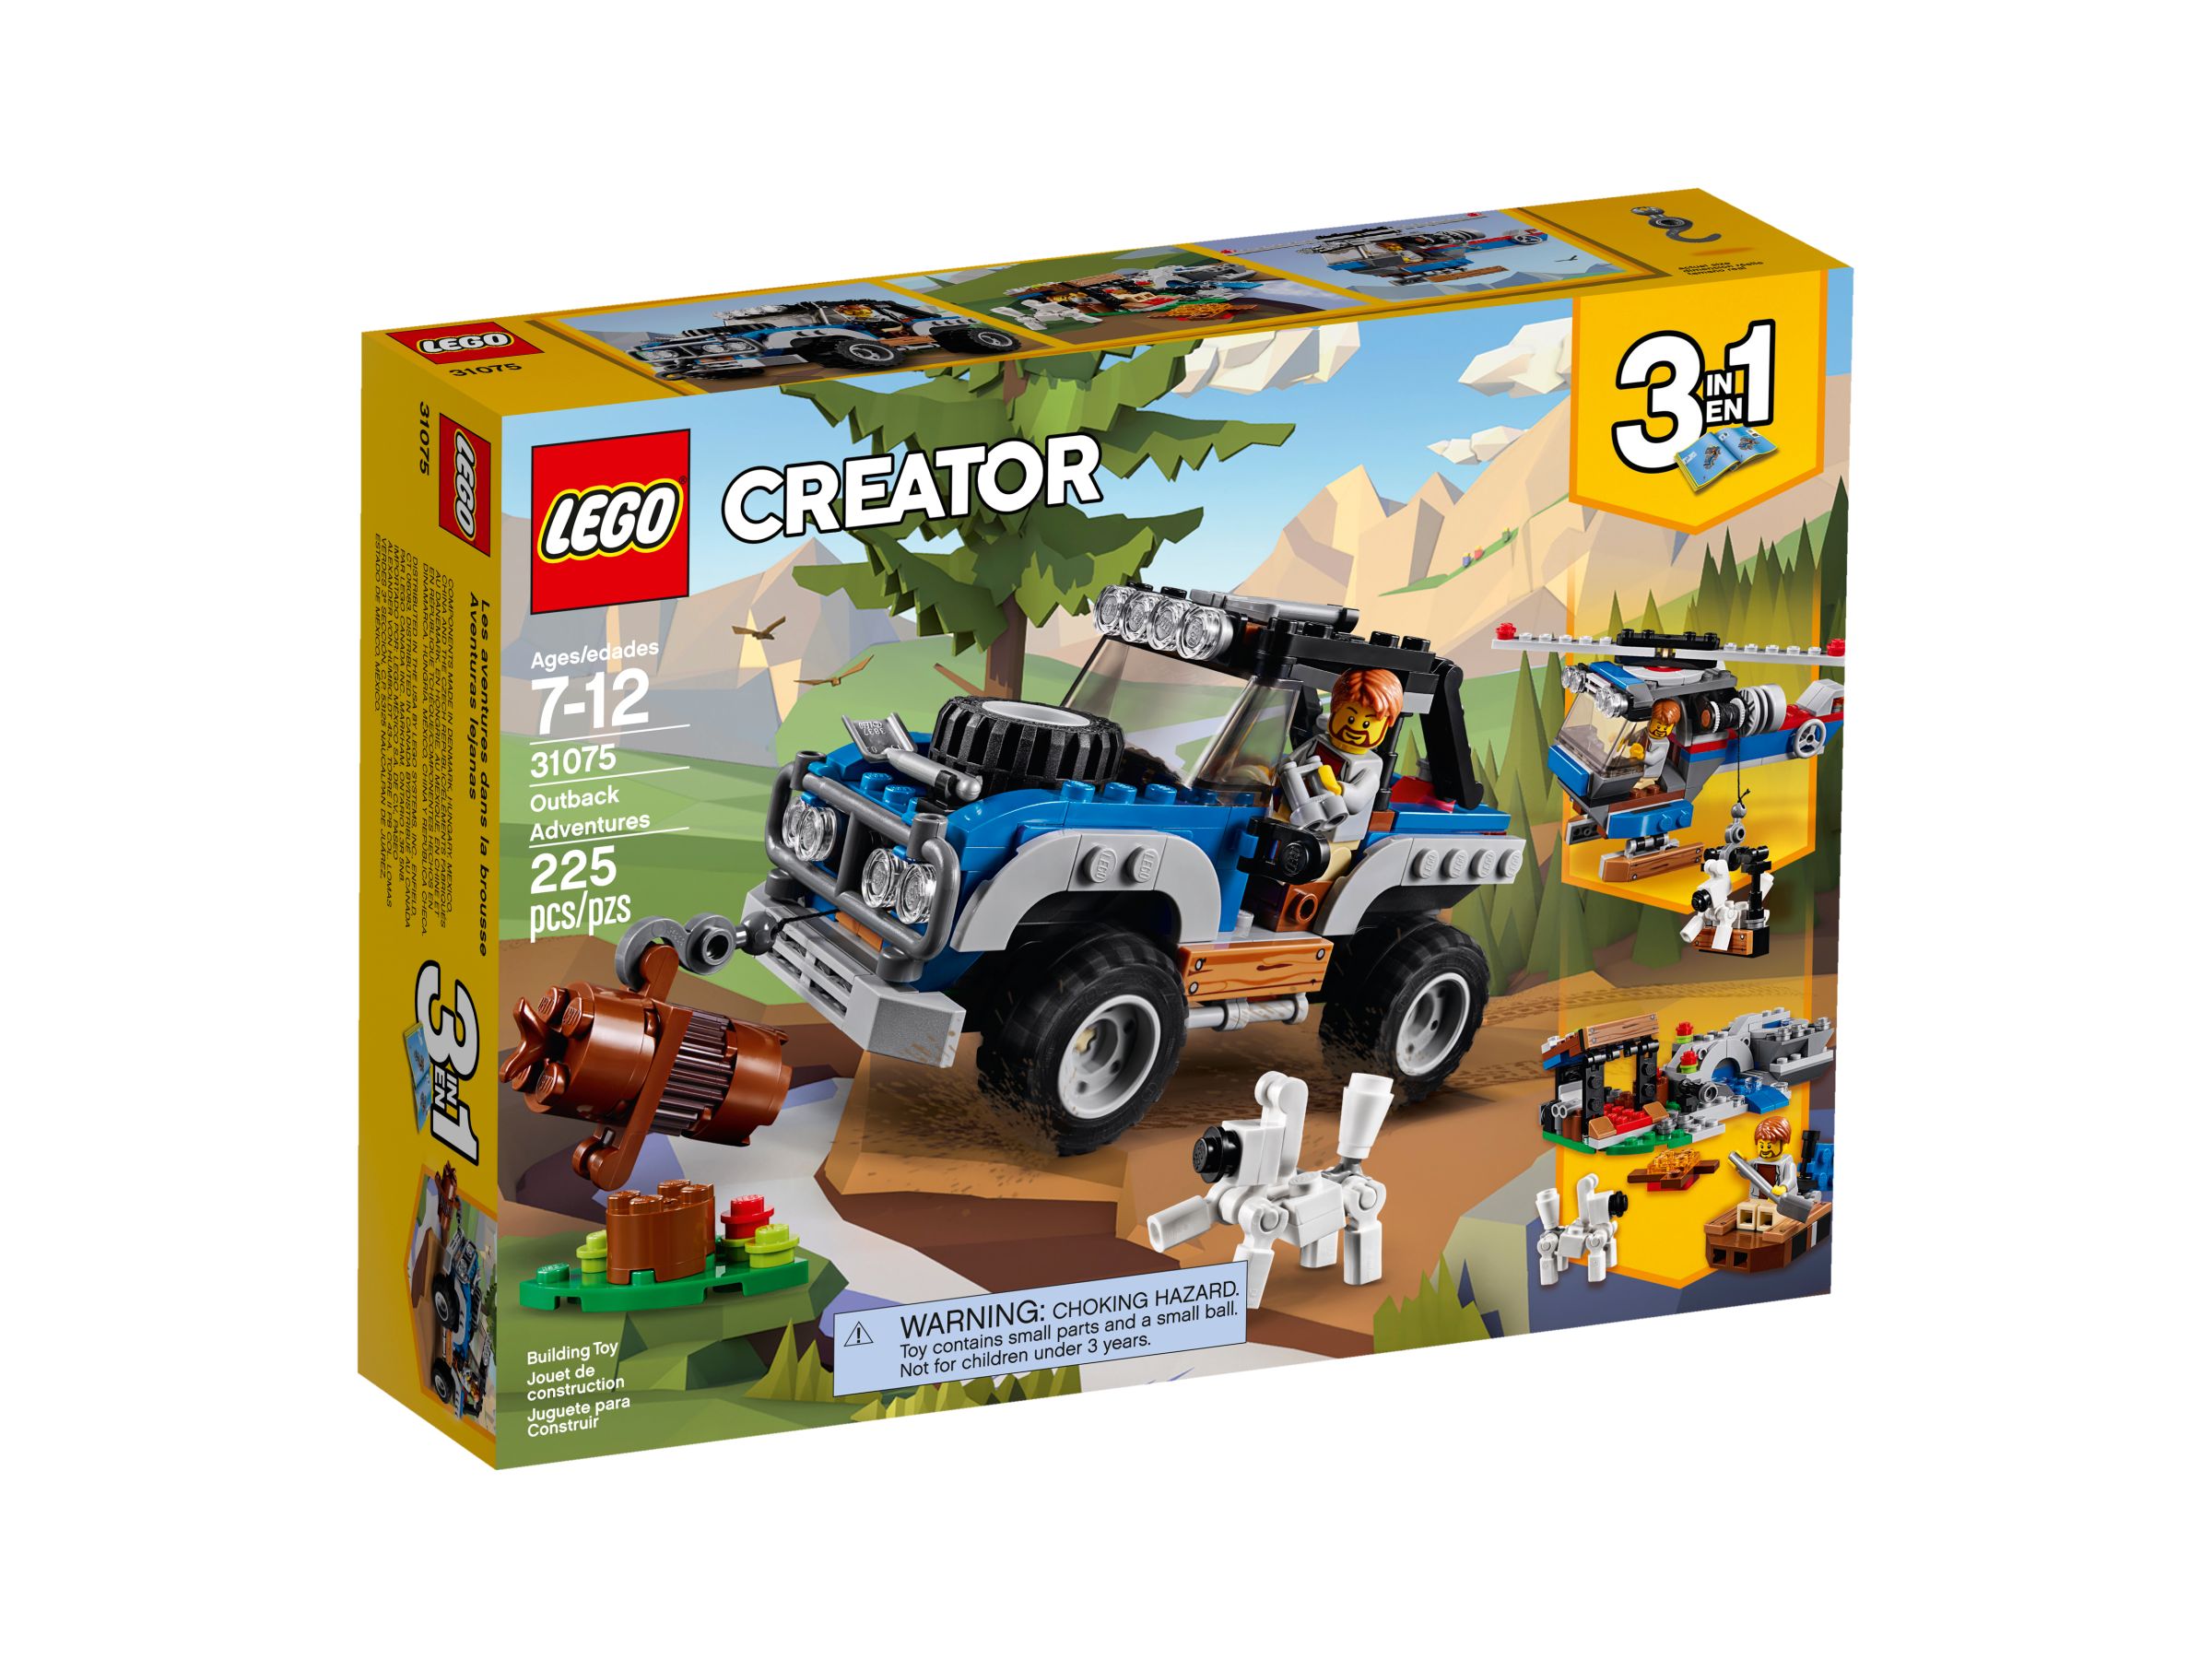 LEGO Creator 31075 Outback Abenteuer LEGO_31075_alt1.jpg